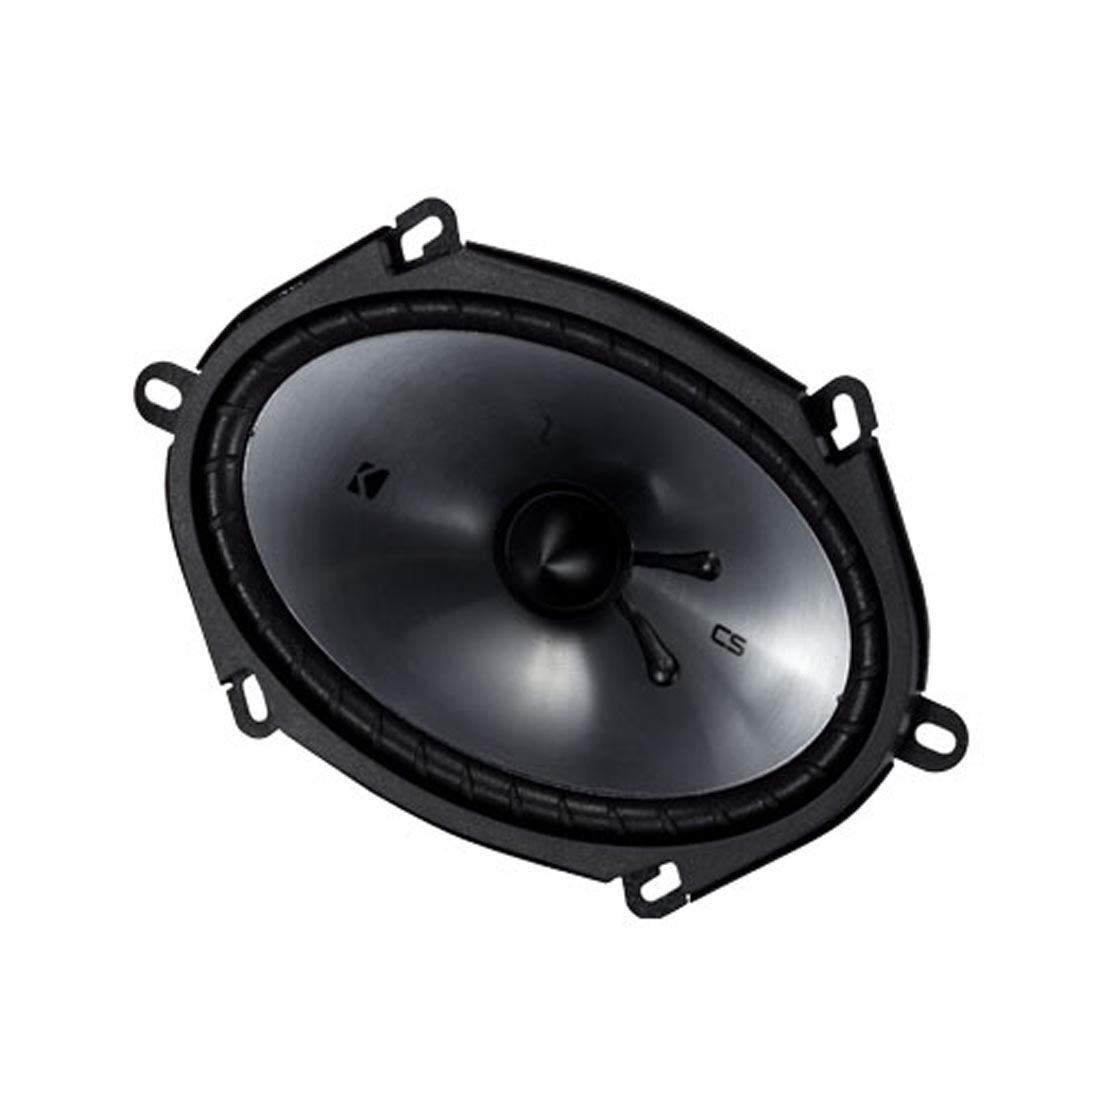 Kicker 46CSS684 CS Series 6"x8" Component Speaker System